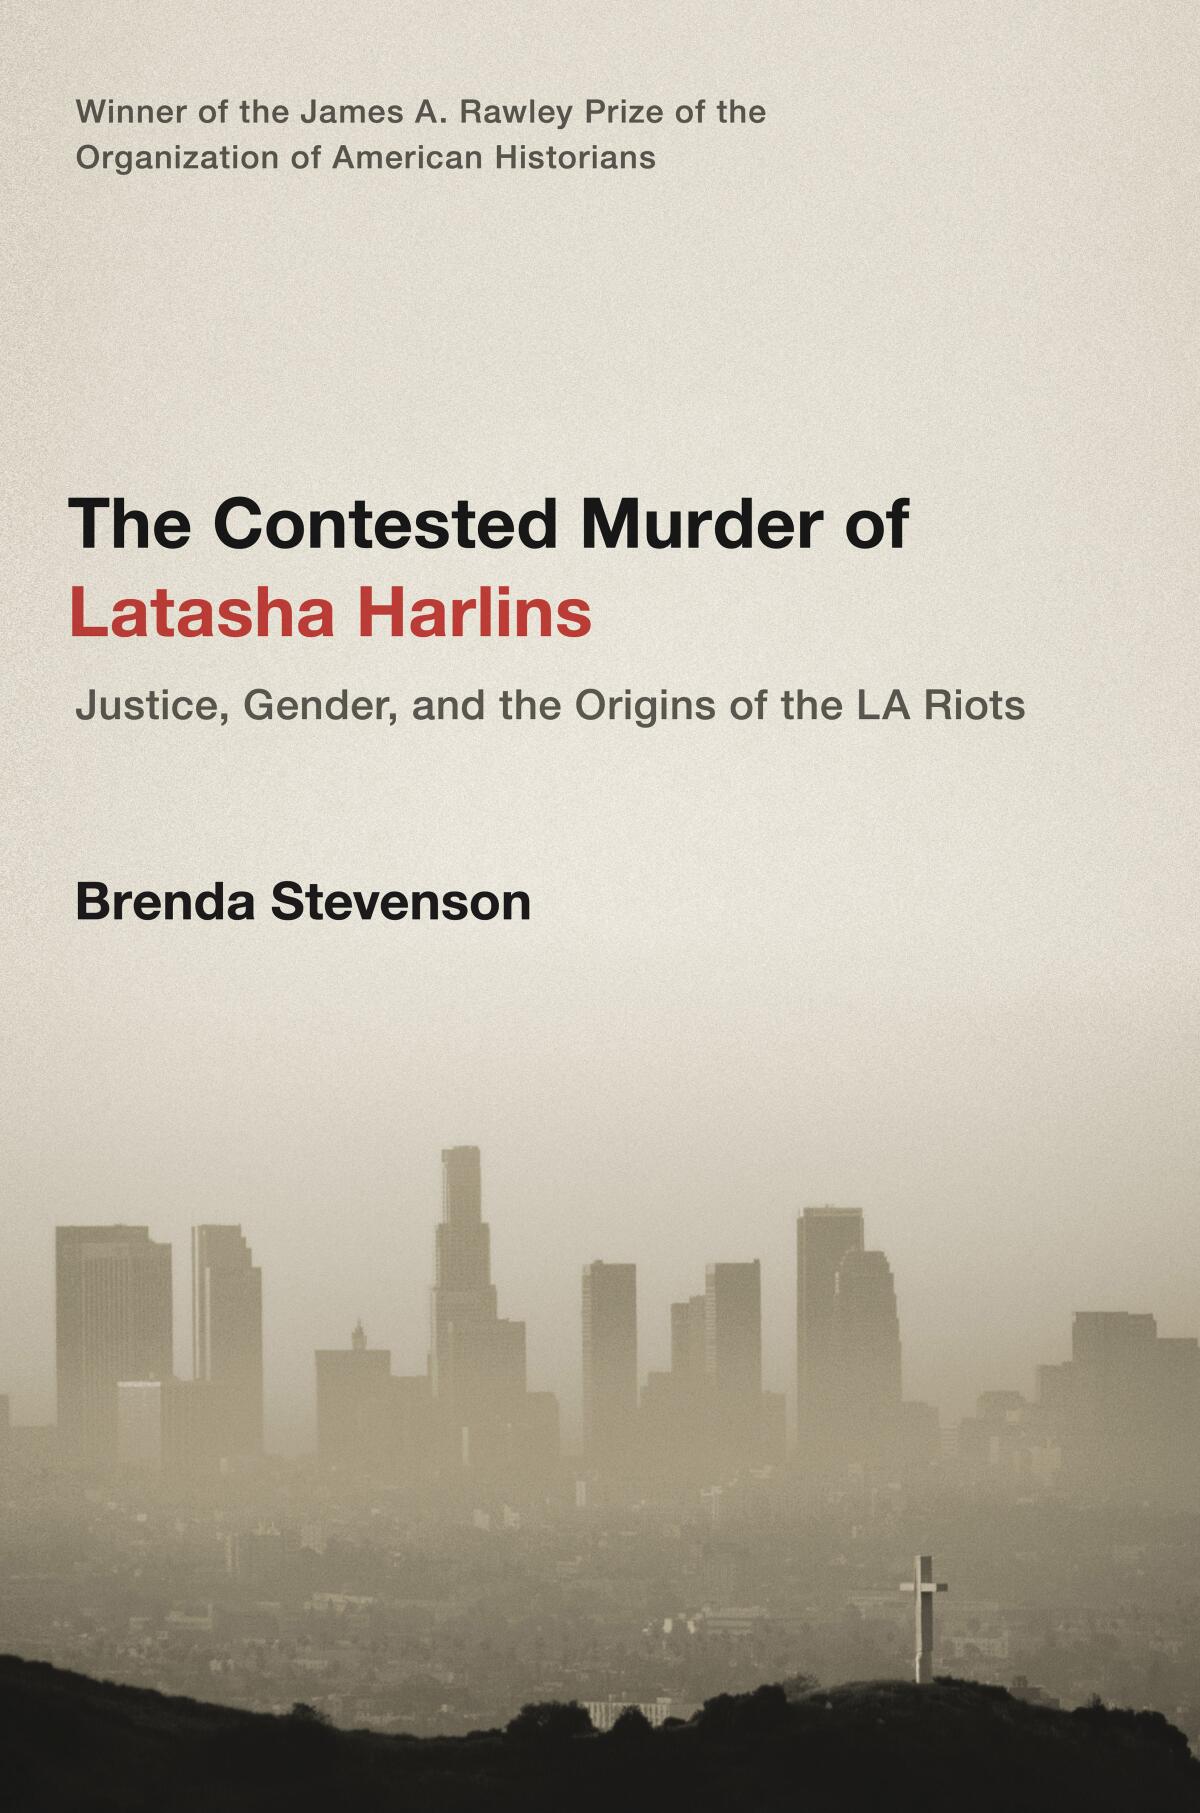 'The Contested Murder of Latasha Harlins' by Brenda Stevenson